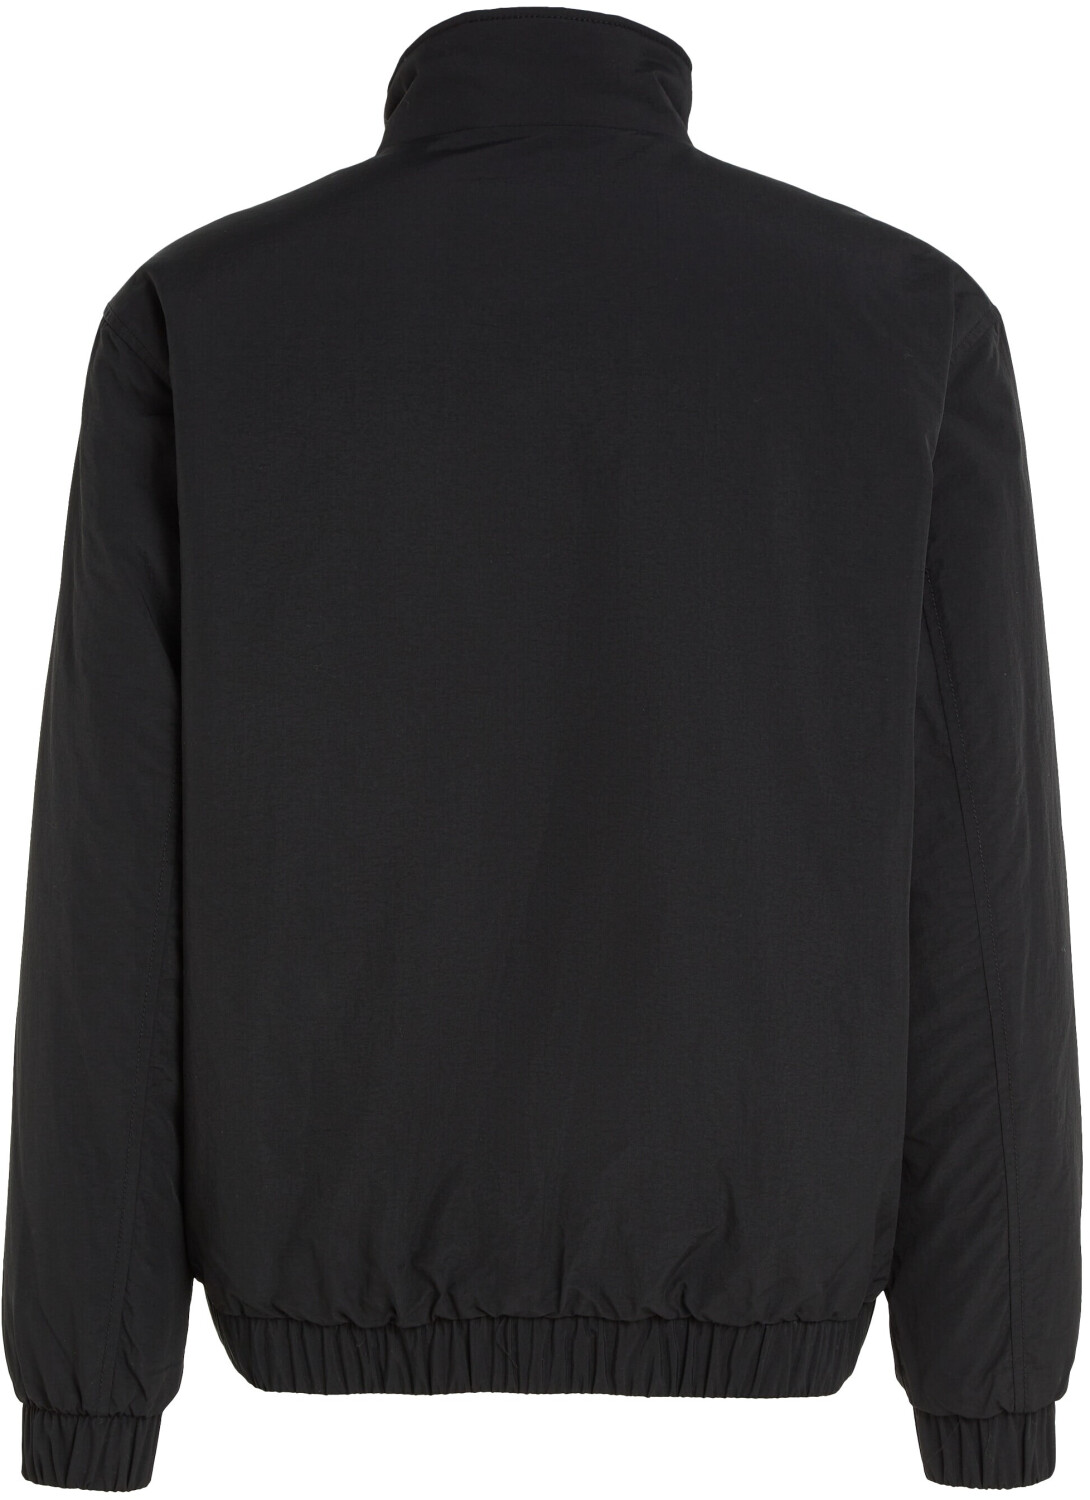 Jacket on Hilfiger black £86.99 Padded Essential (DM0DM17238) Tommy Deals (Today) TJM Best Buy from –